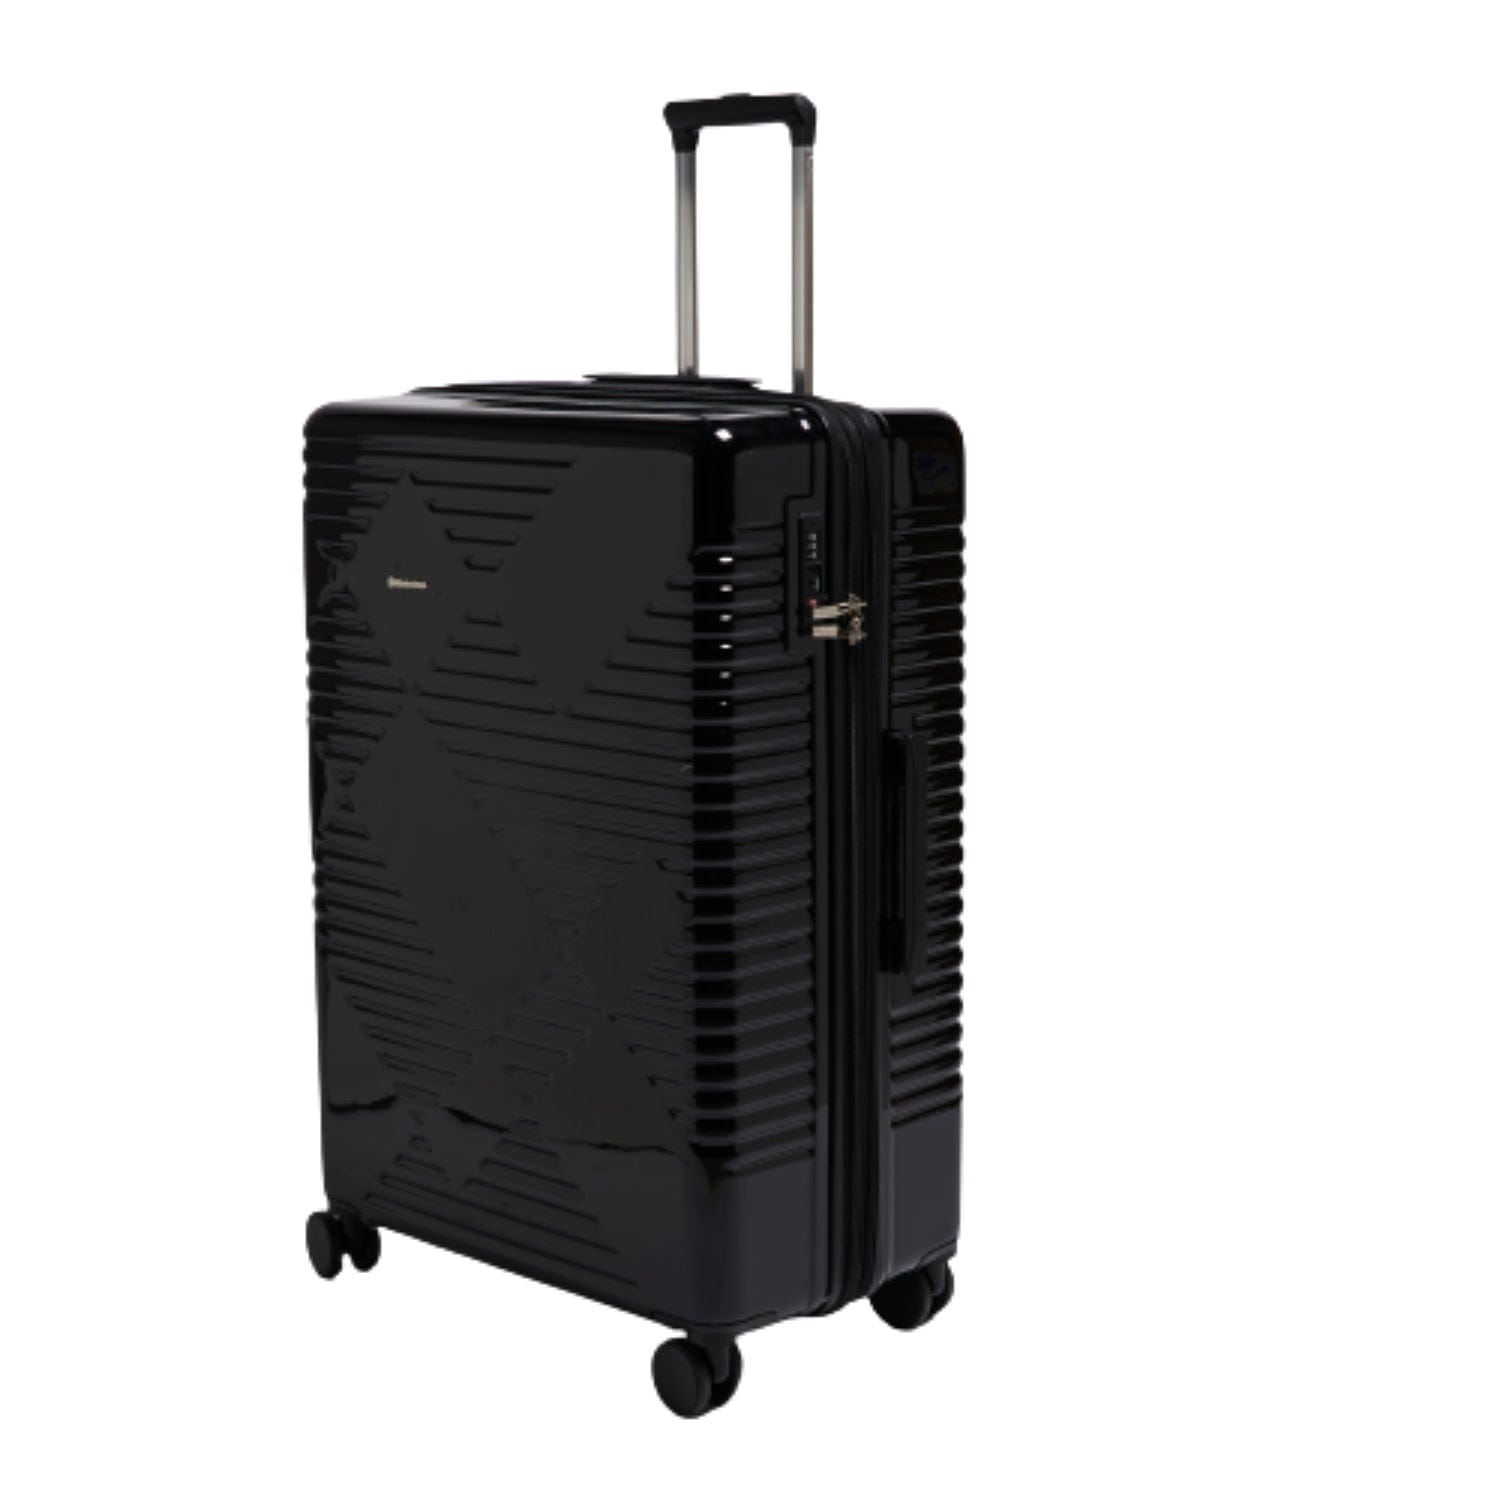 Echolac Extravagant  56+71+82cm Hardcase Expandable 4 Double Wheel 3Pc Luggage Trolley Set Black - CTH0062 S- 3PC SET BLACK